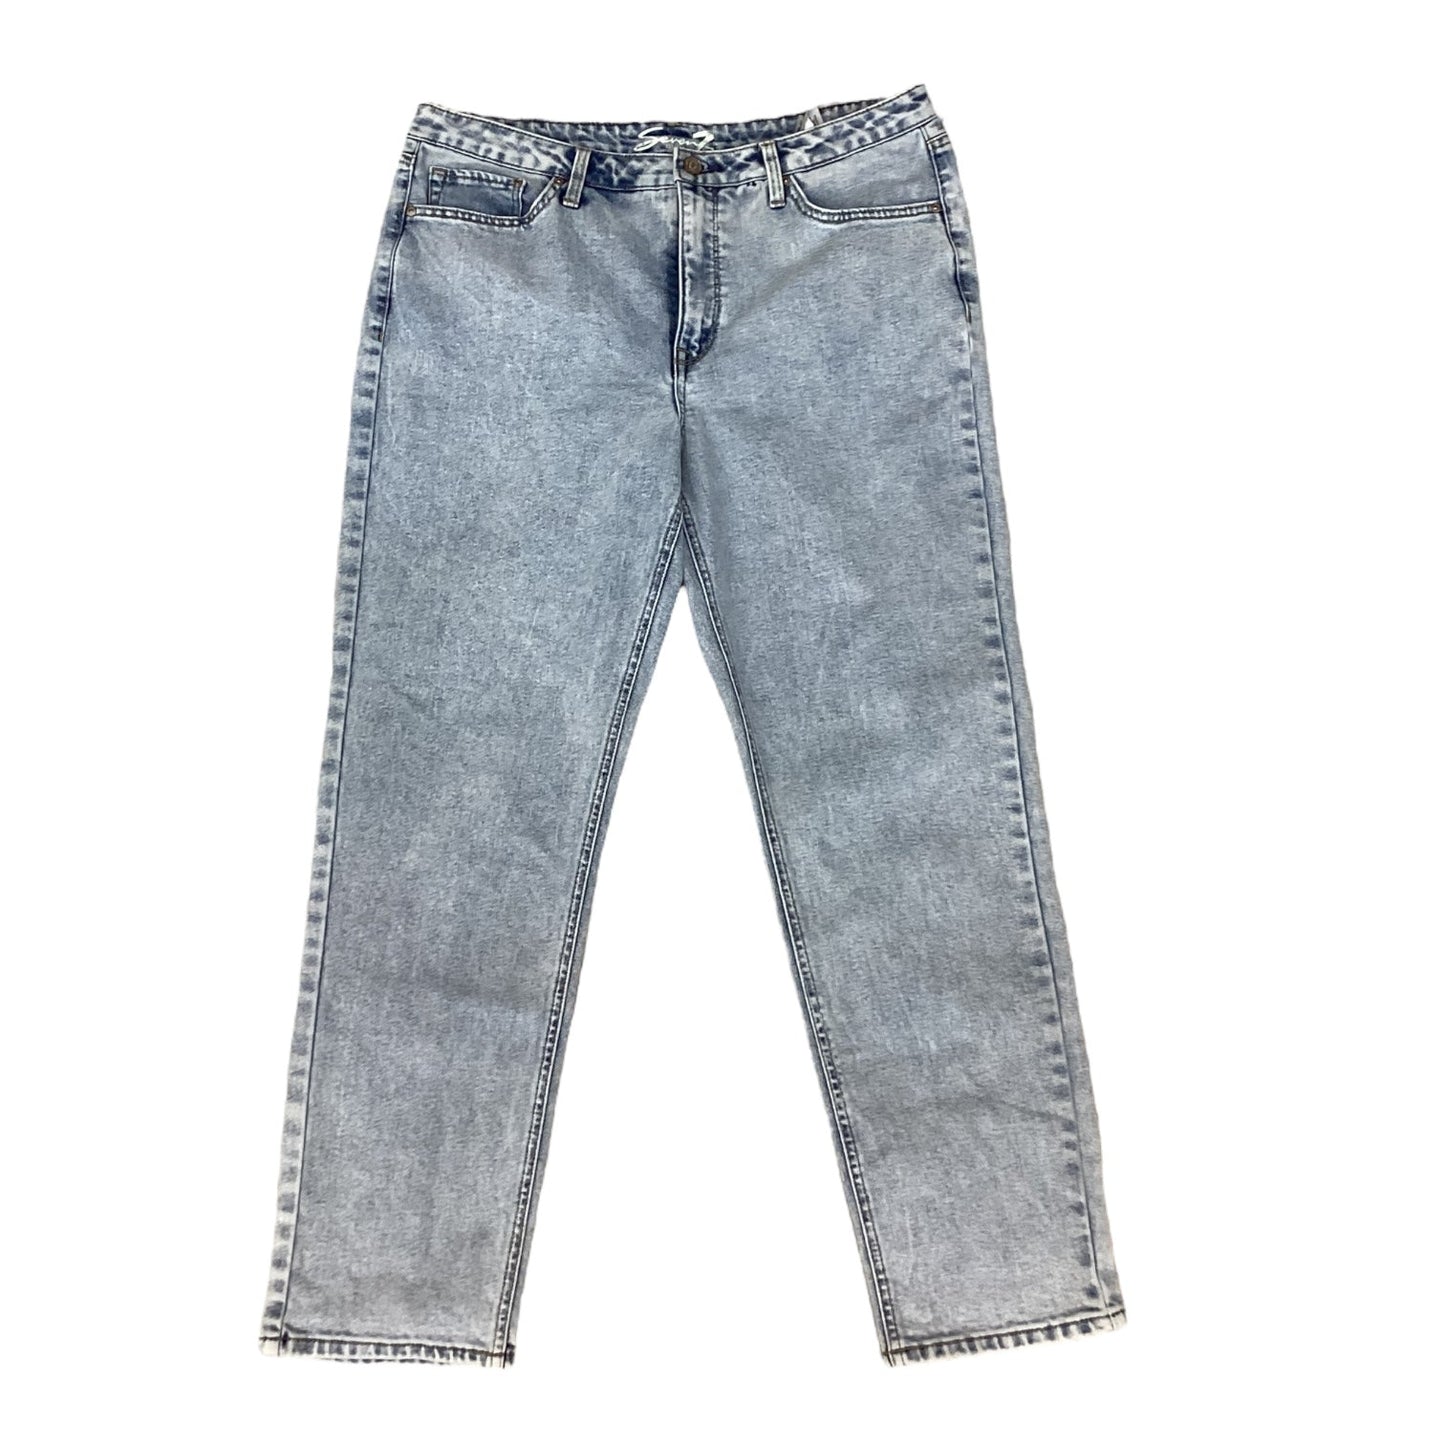 Blue Denim Jeans Straight Seven 7, Size 14